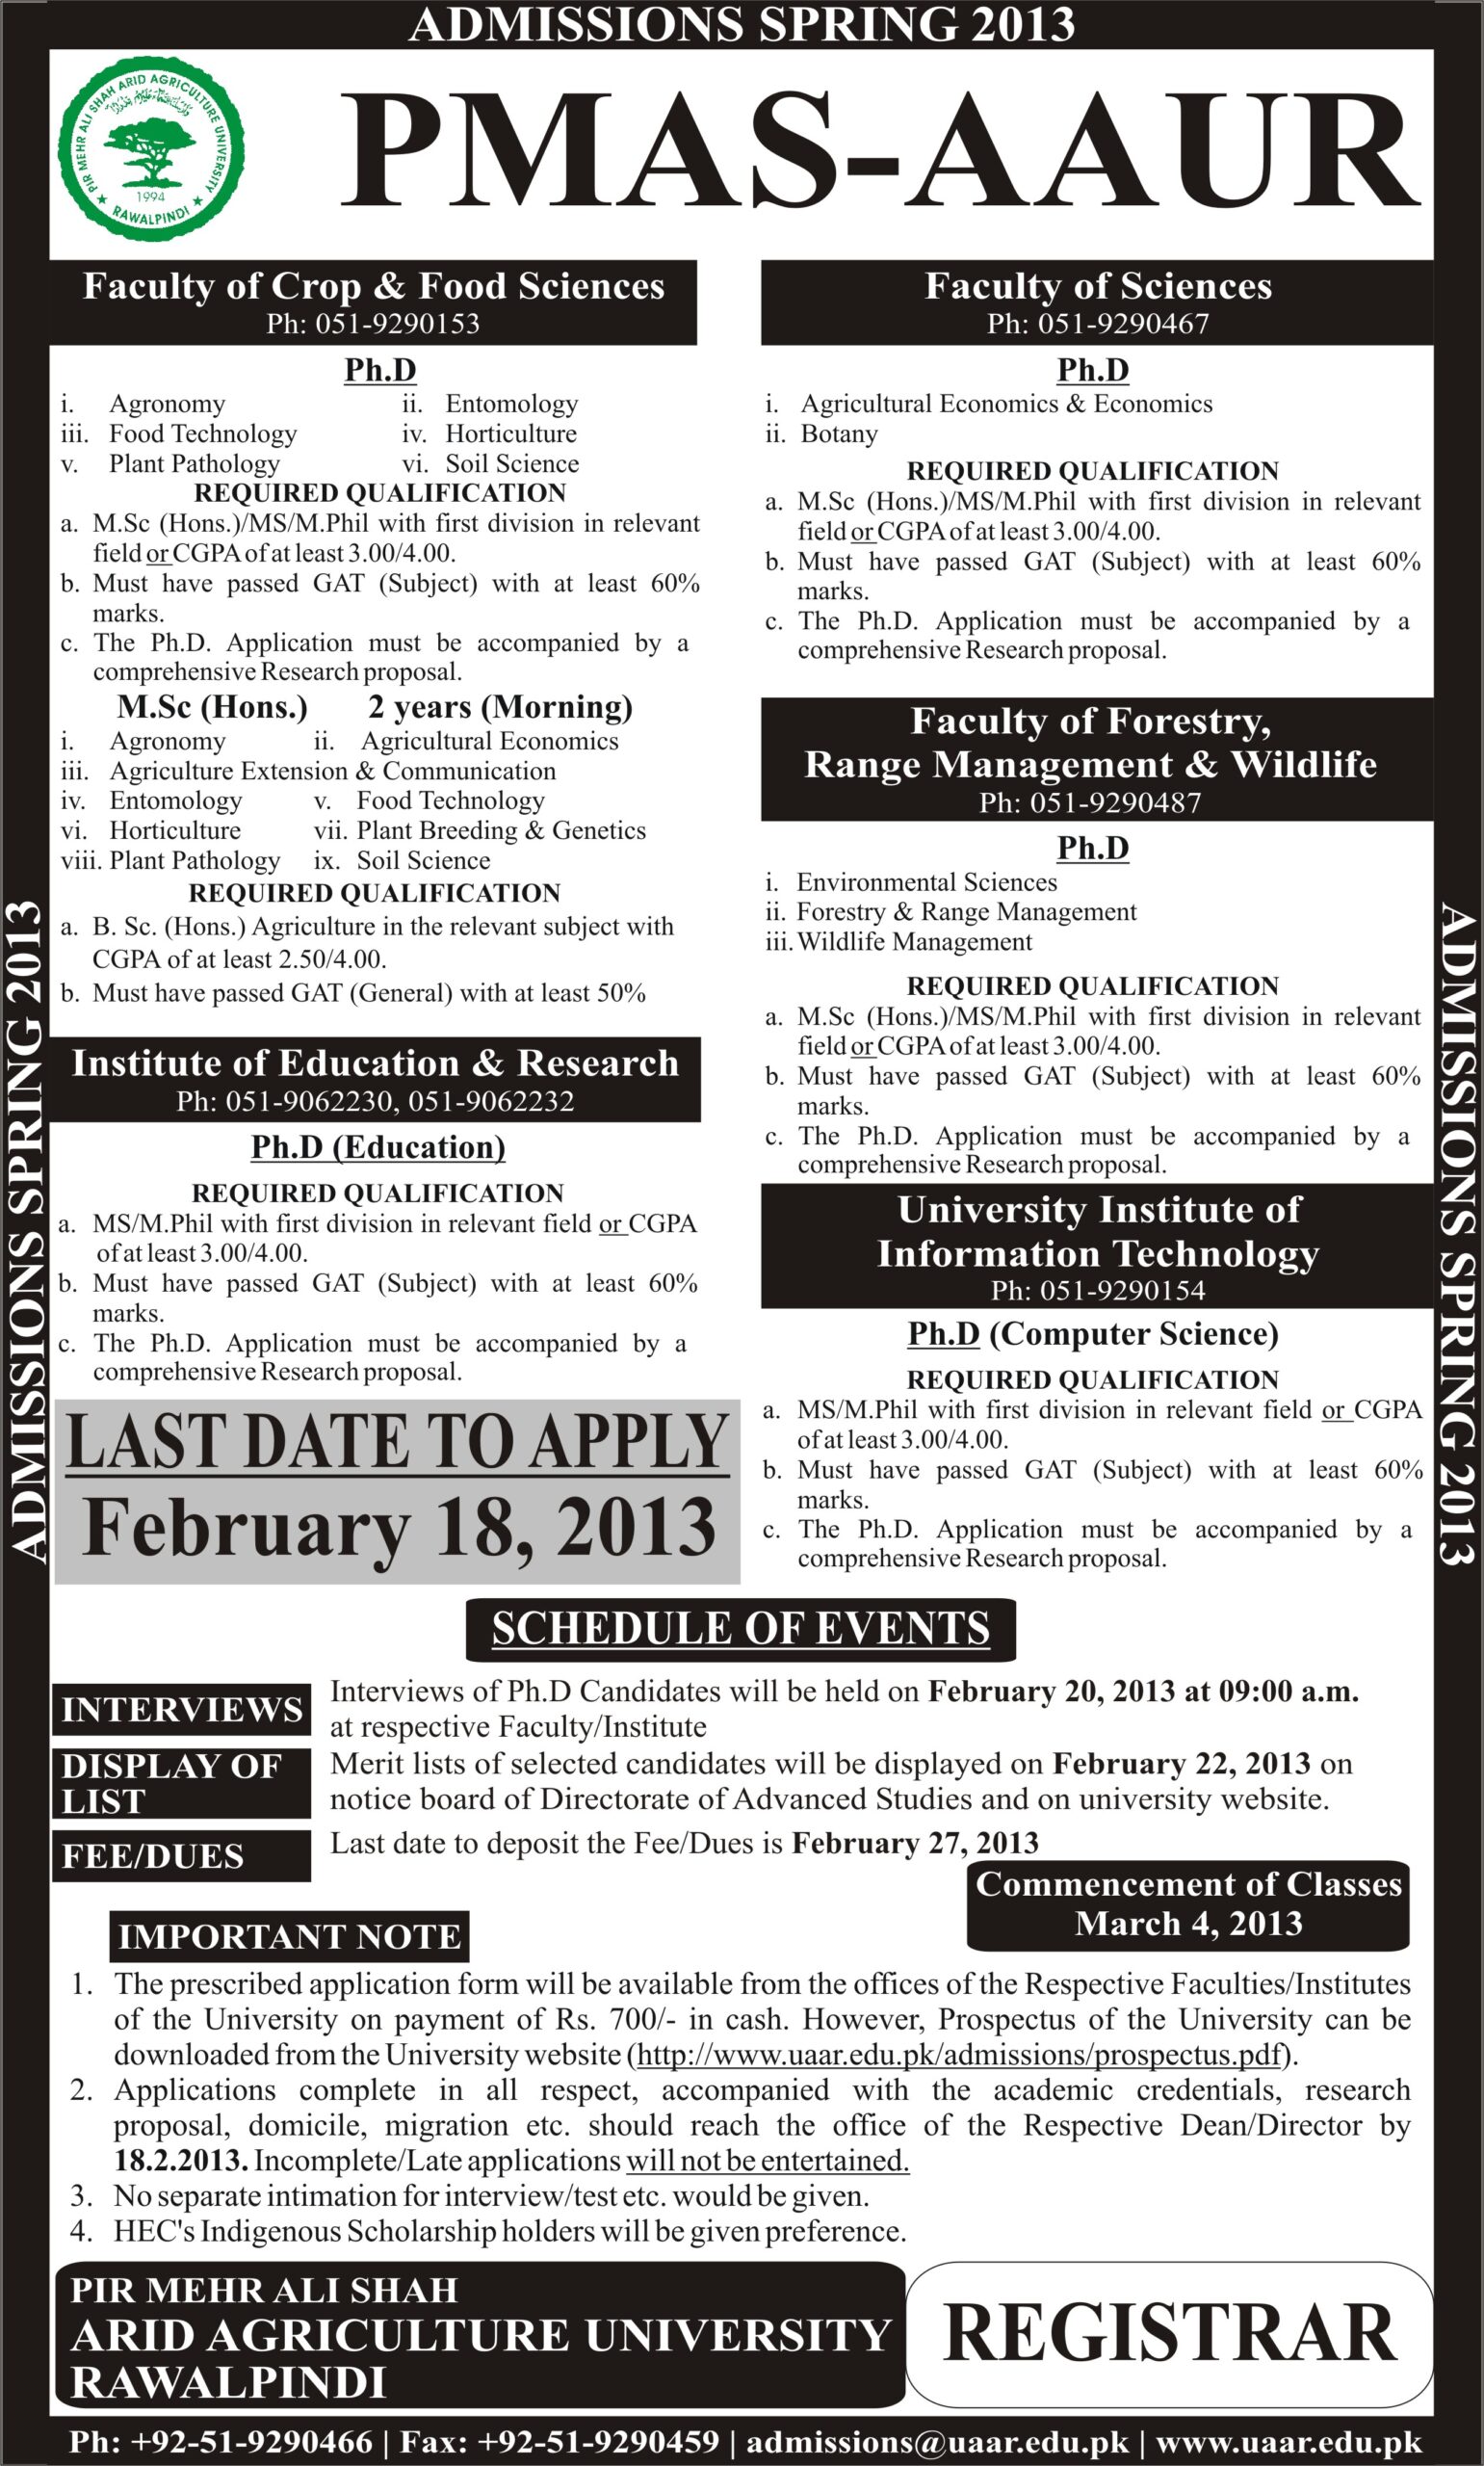 Arid Agriculture University Rawalpindi Admissions 2013